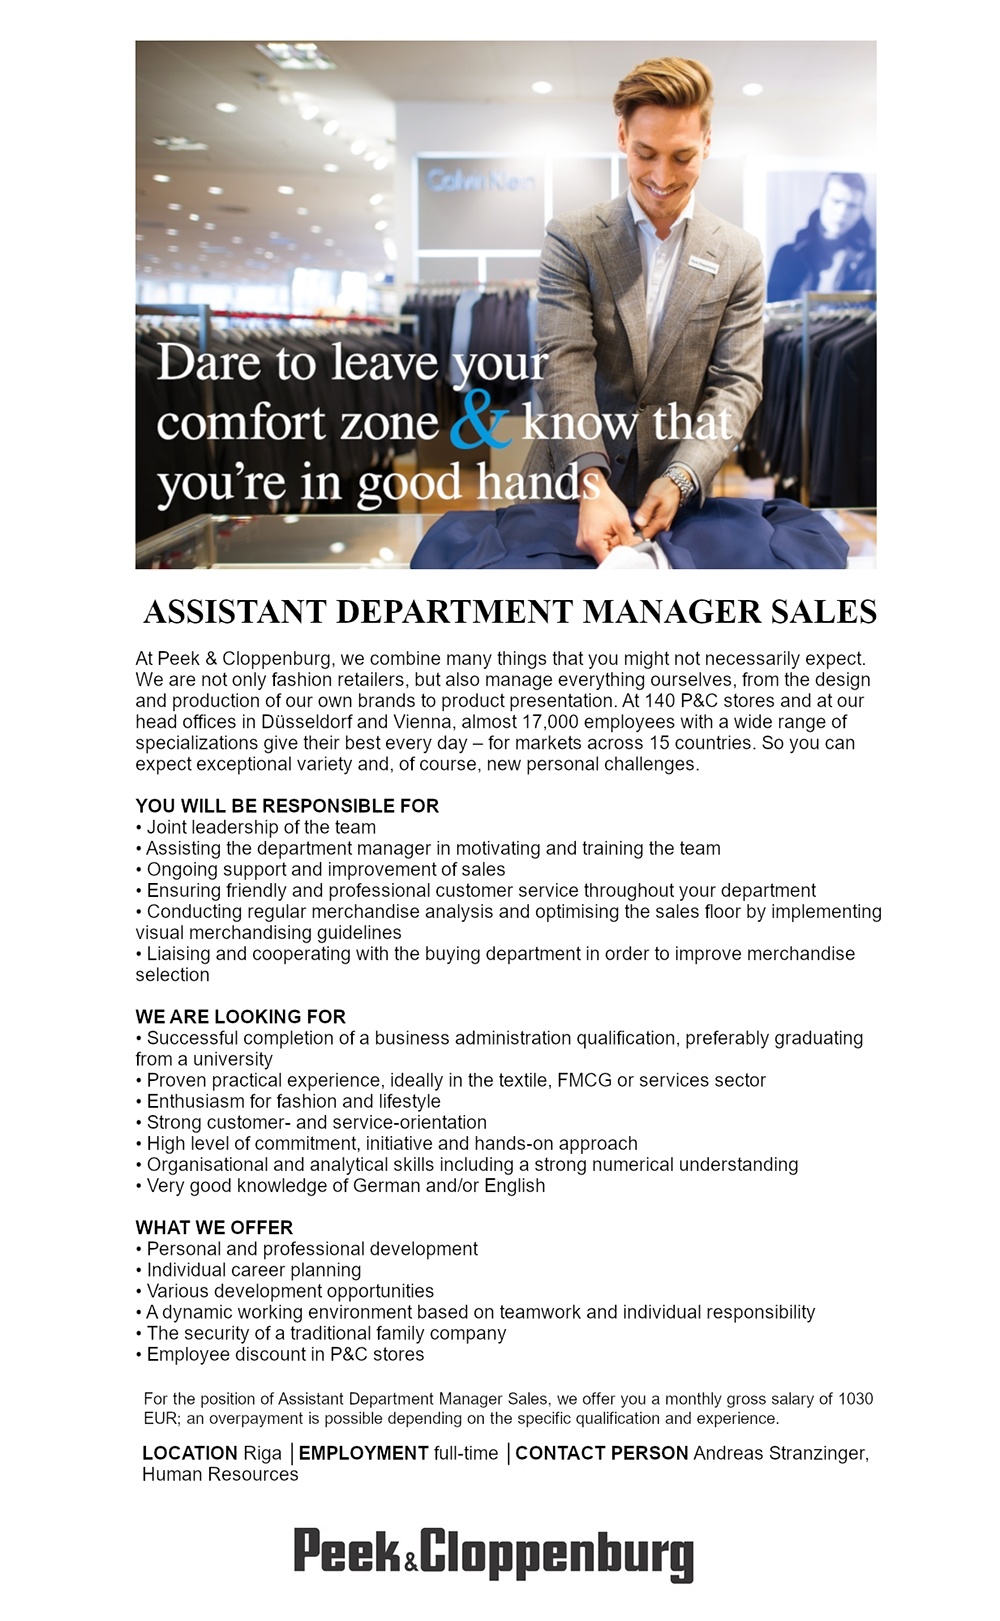 Trendmark, SIA Assistant Department Manager Sales